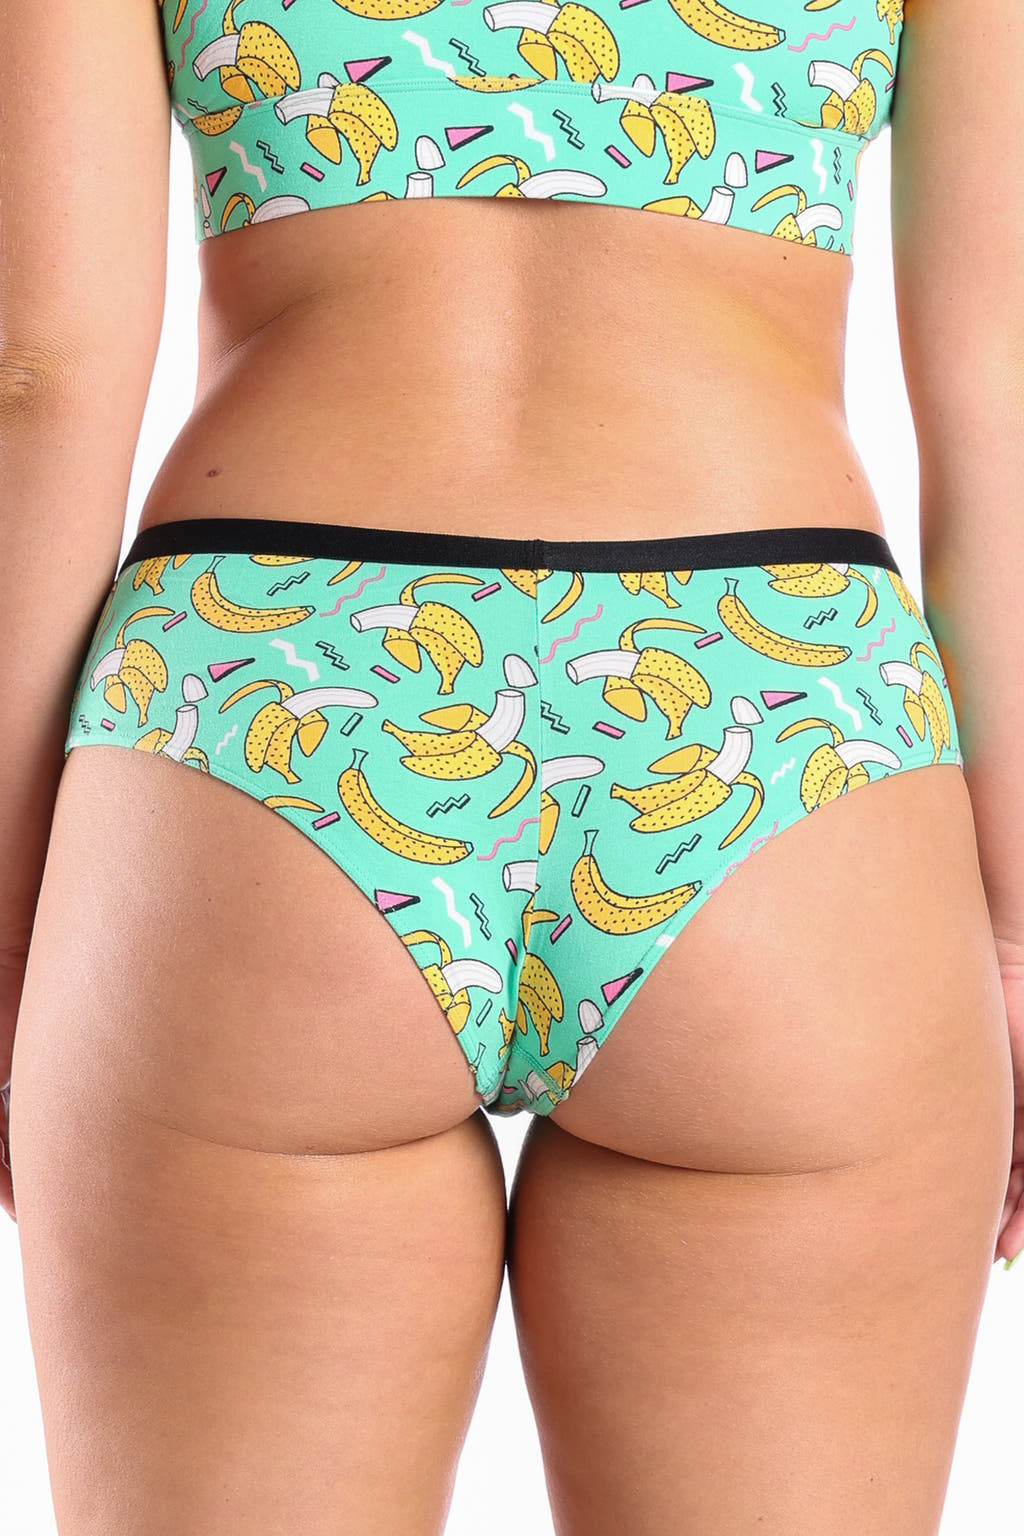 Comfy retro banana underwear for women